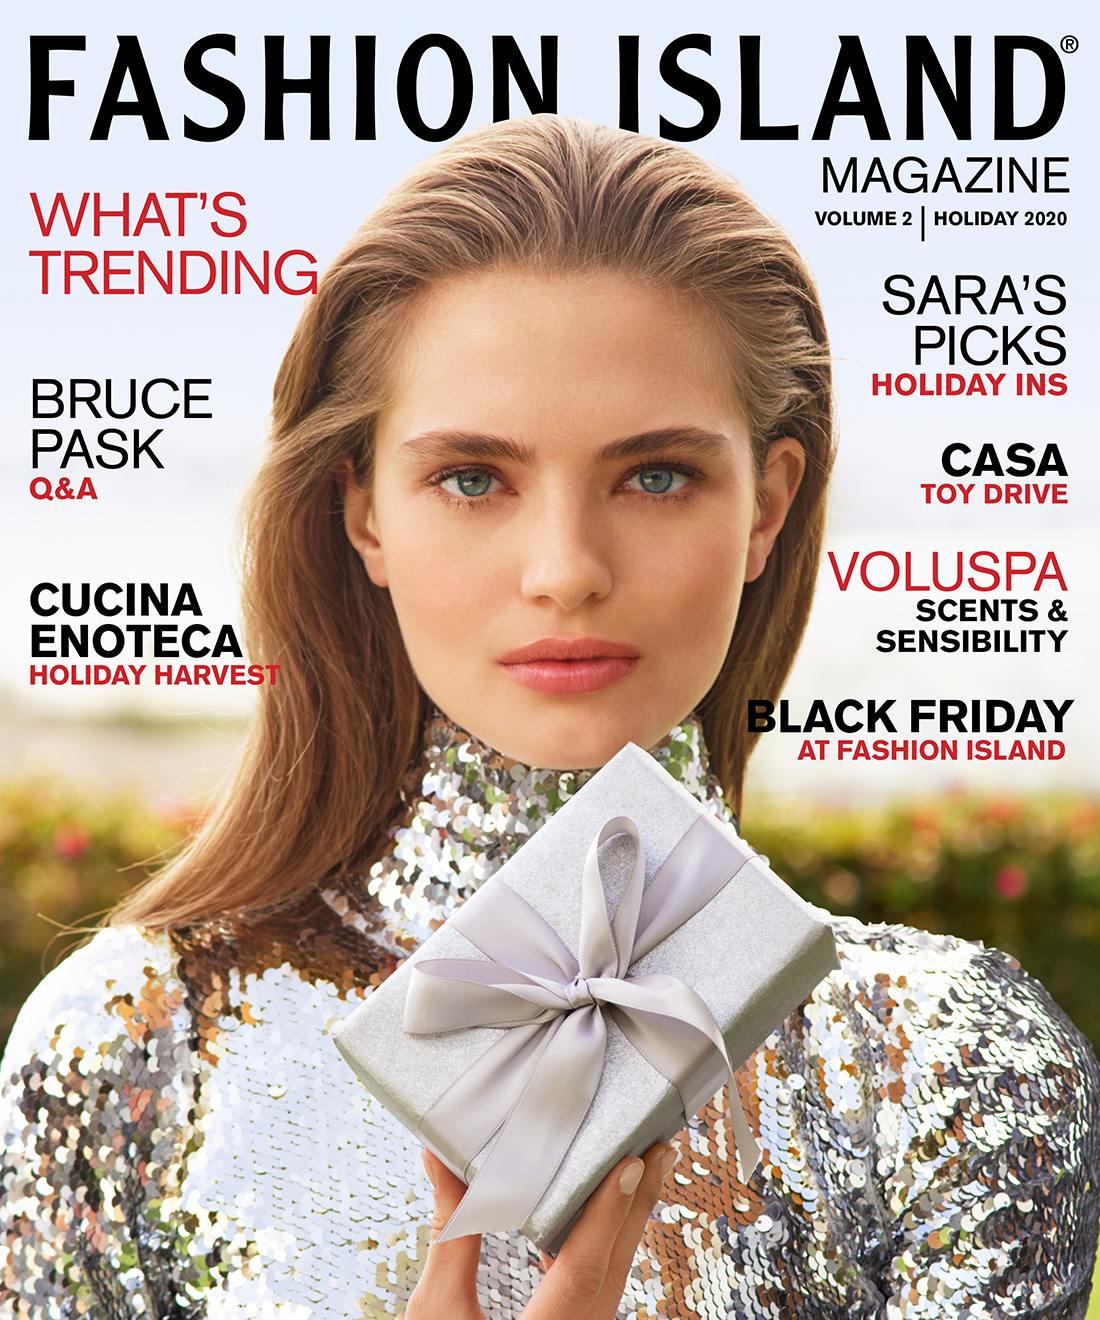 Fashion Island Magazine, the Holiday Edition, Has Arrived